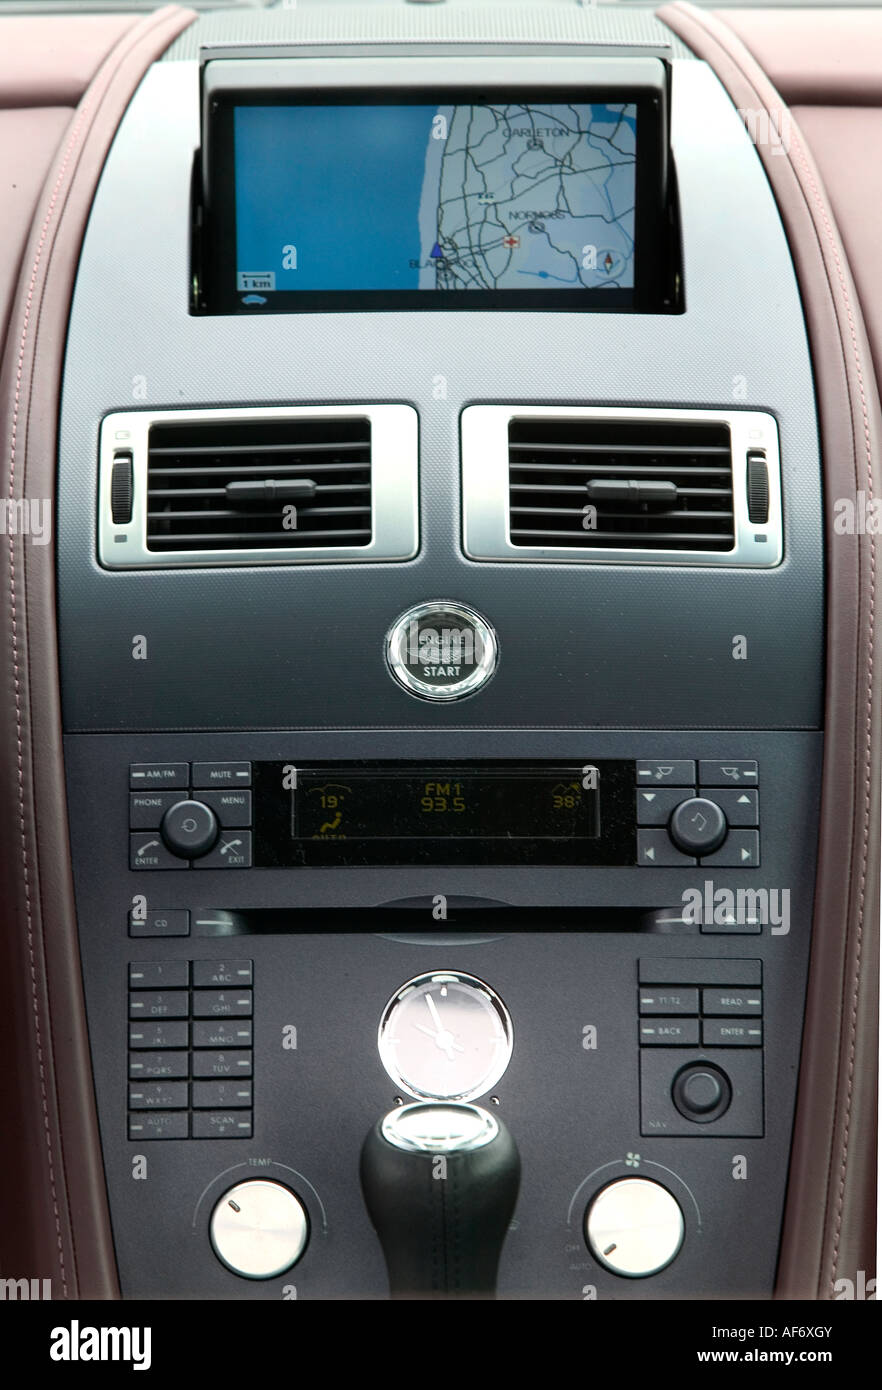 Aston Martin sat Navigation system UK Stock Photo